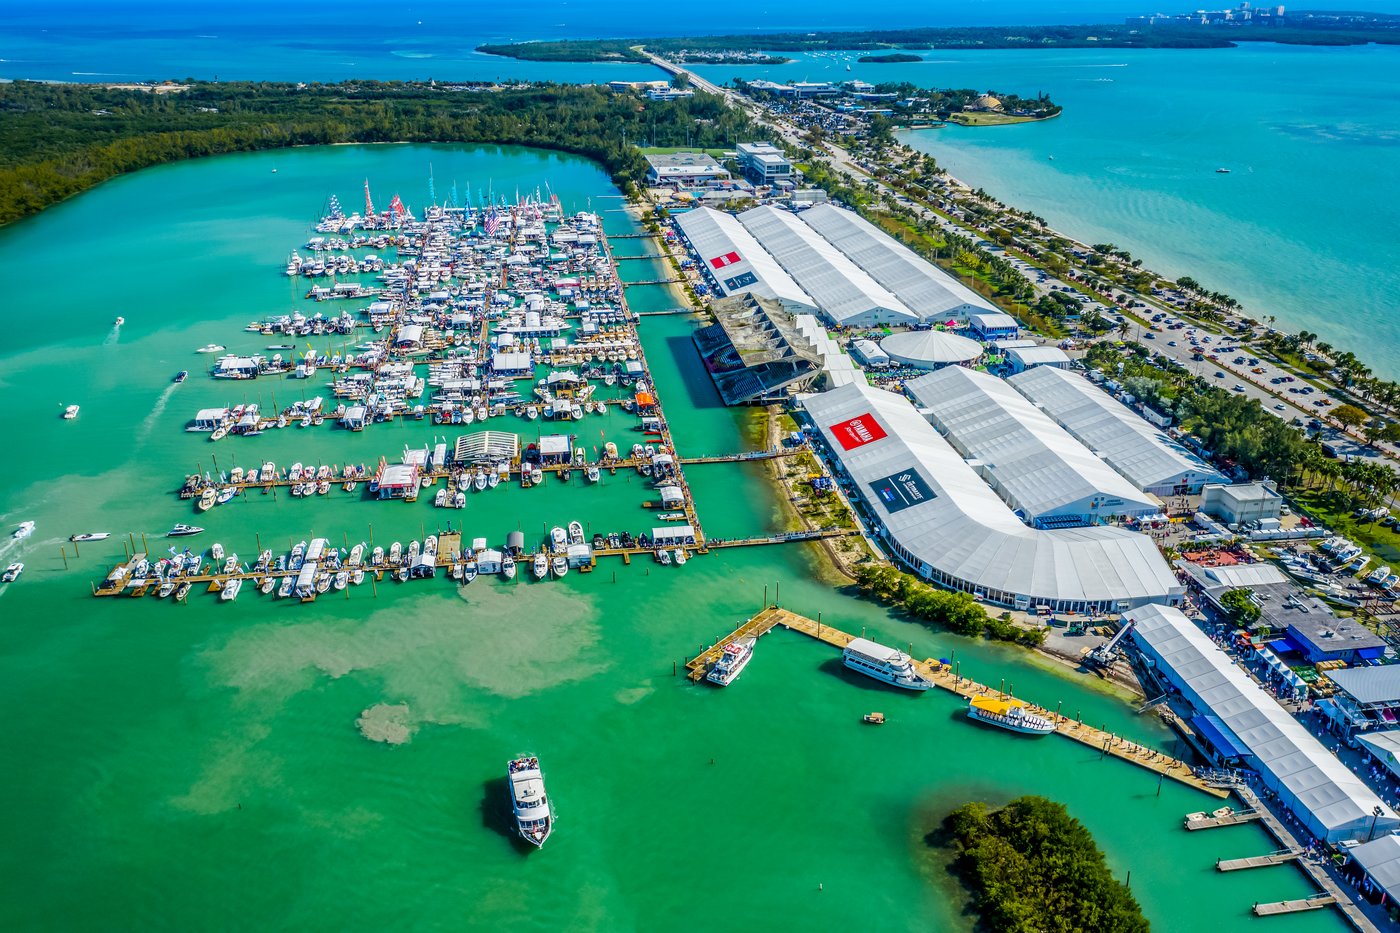 Miami Boat Show Aerial View